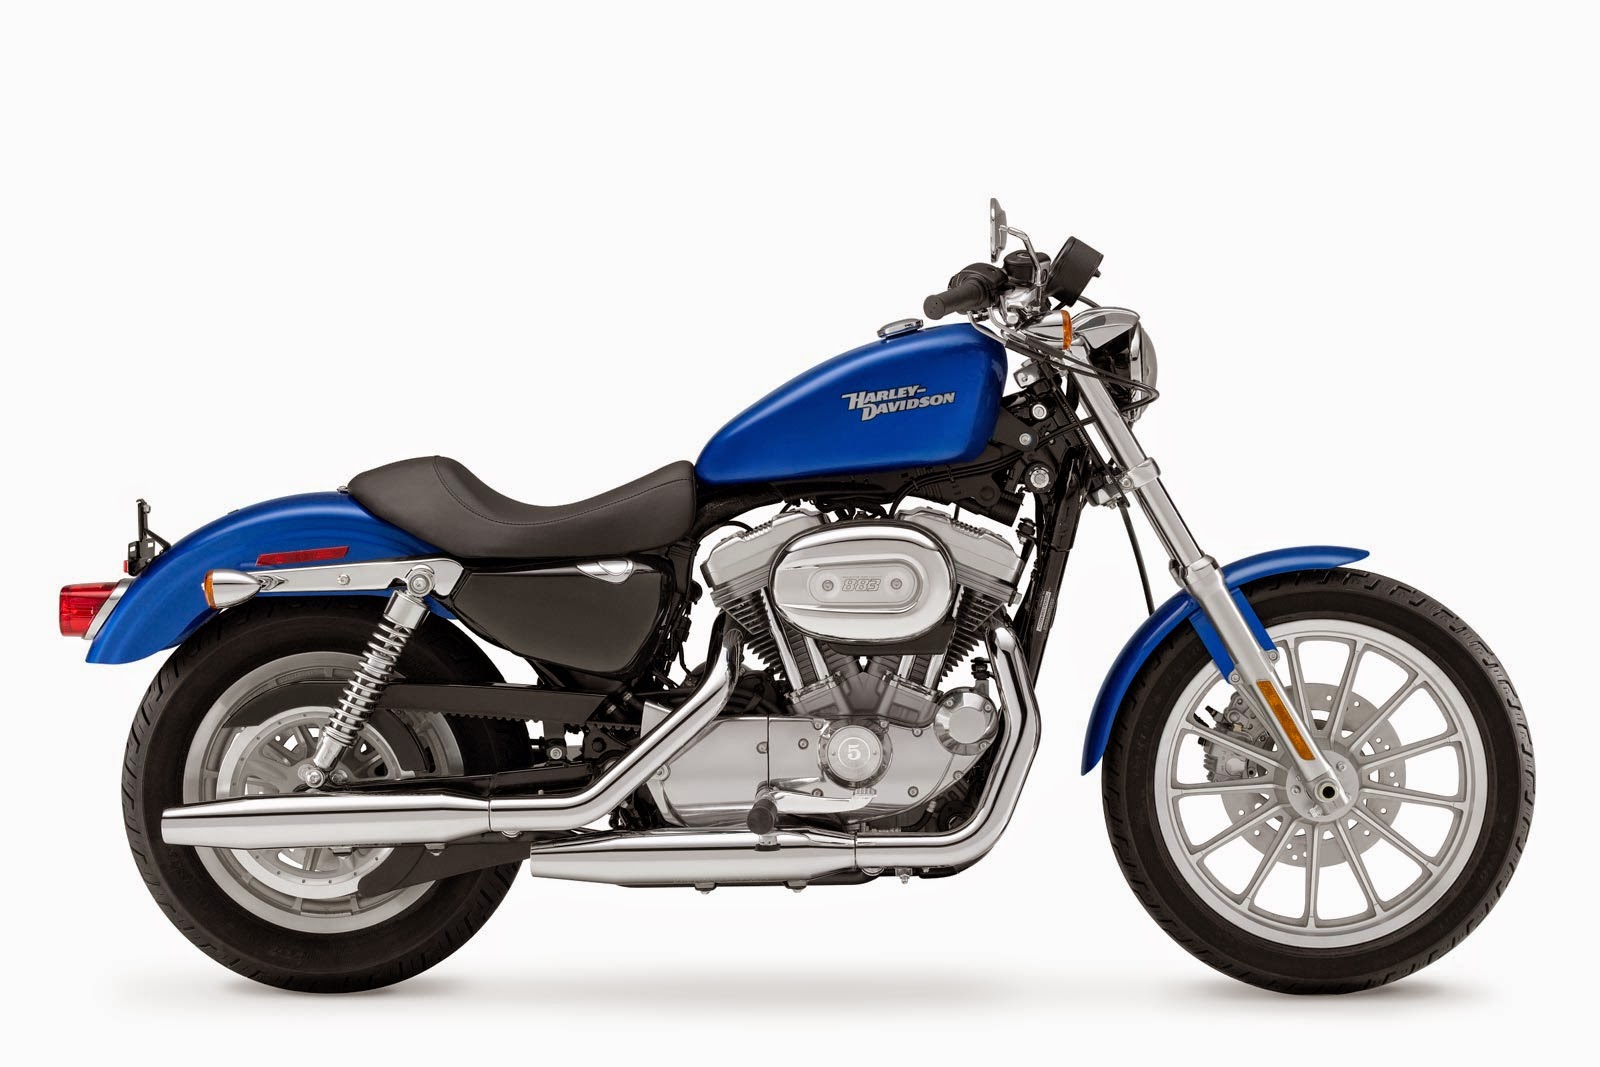 Suzuki Thunder Modifikasi Harley Thecitycyclist